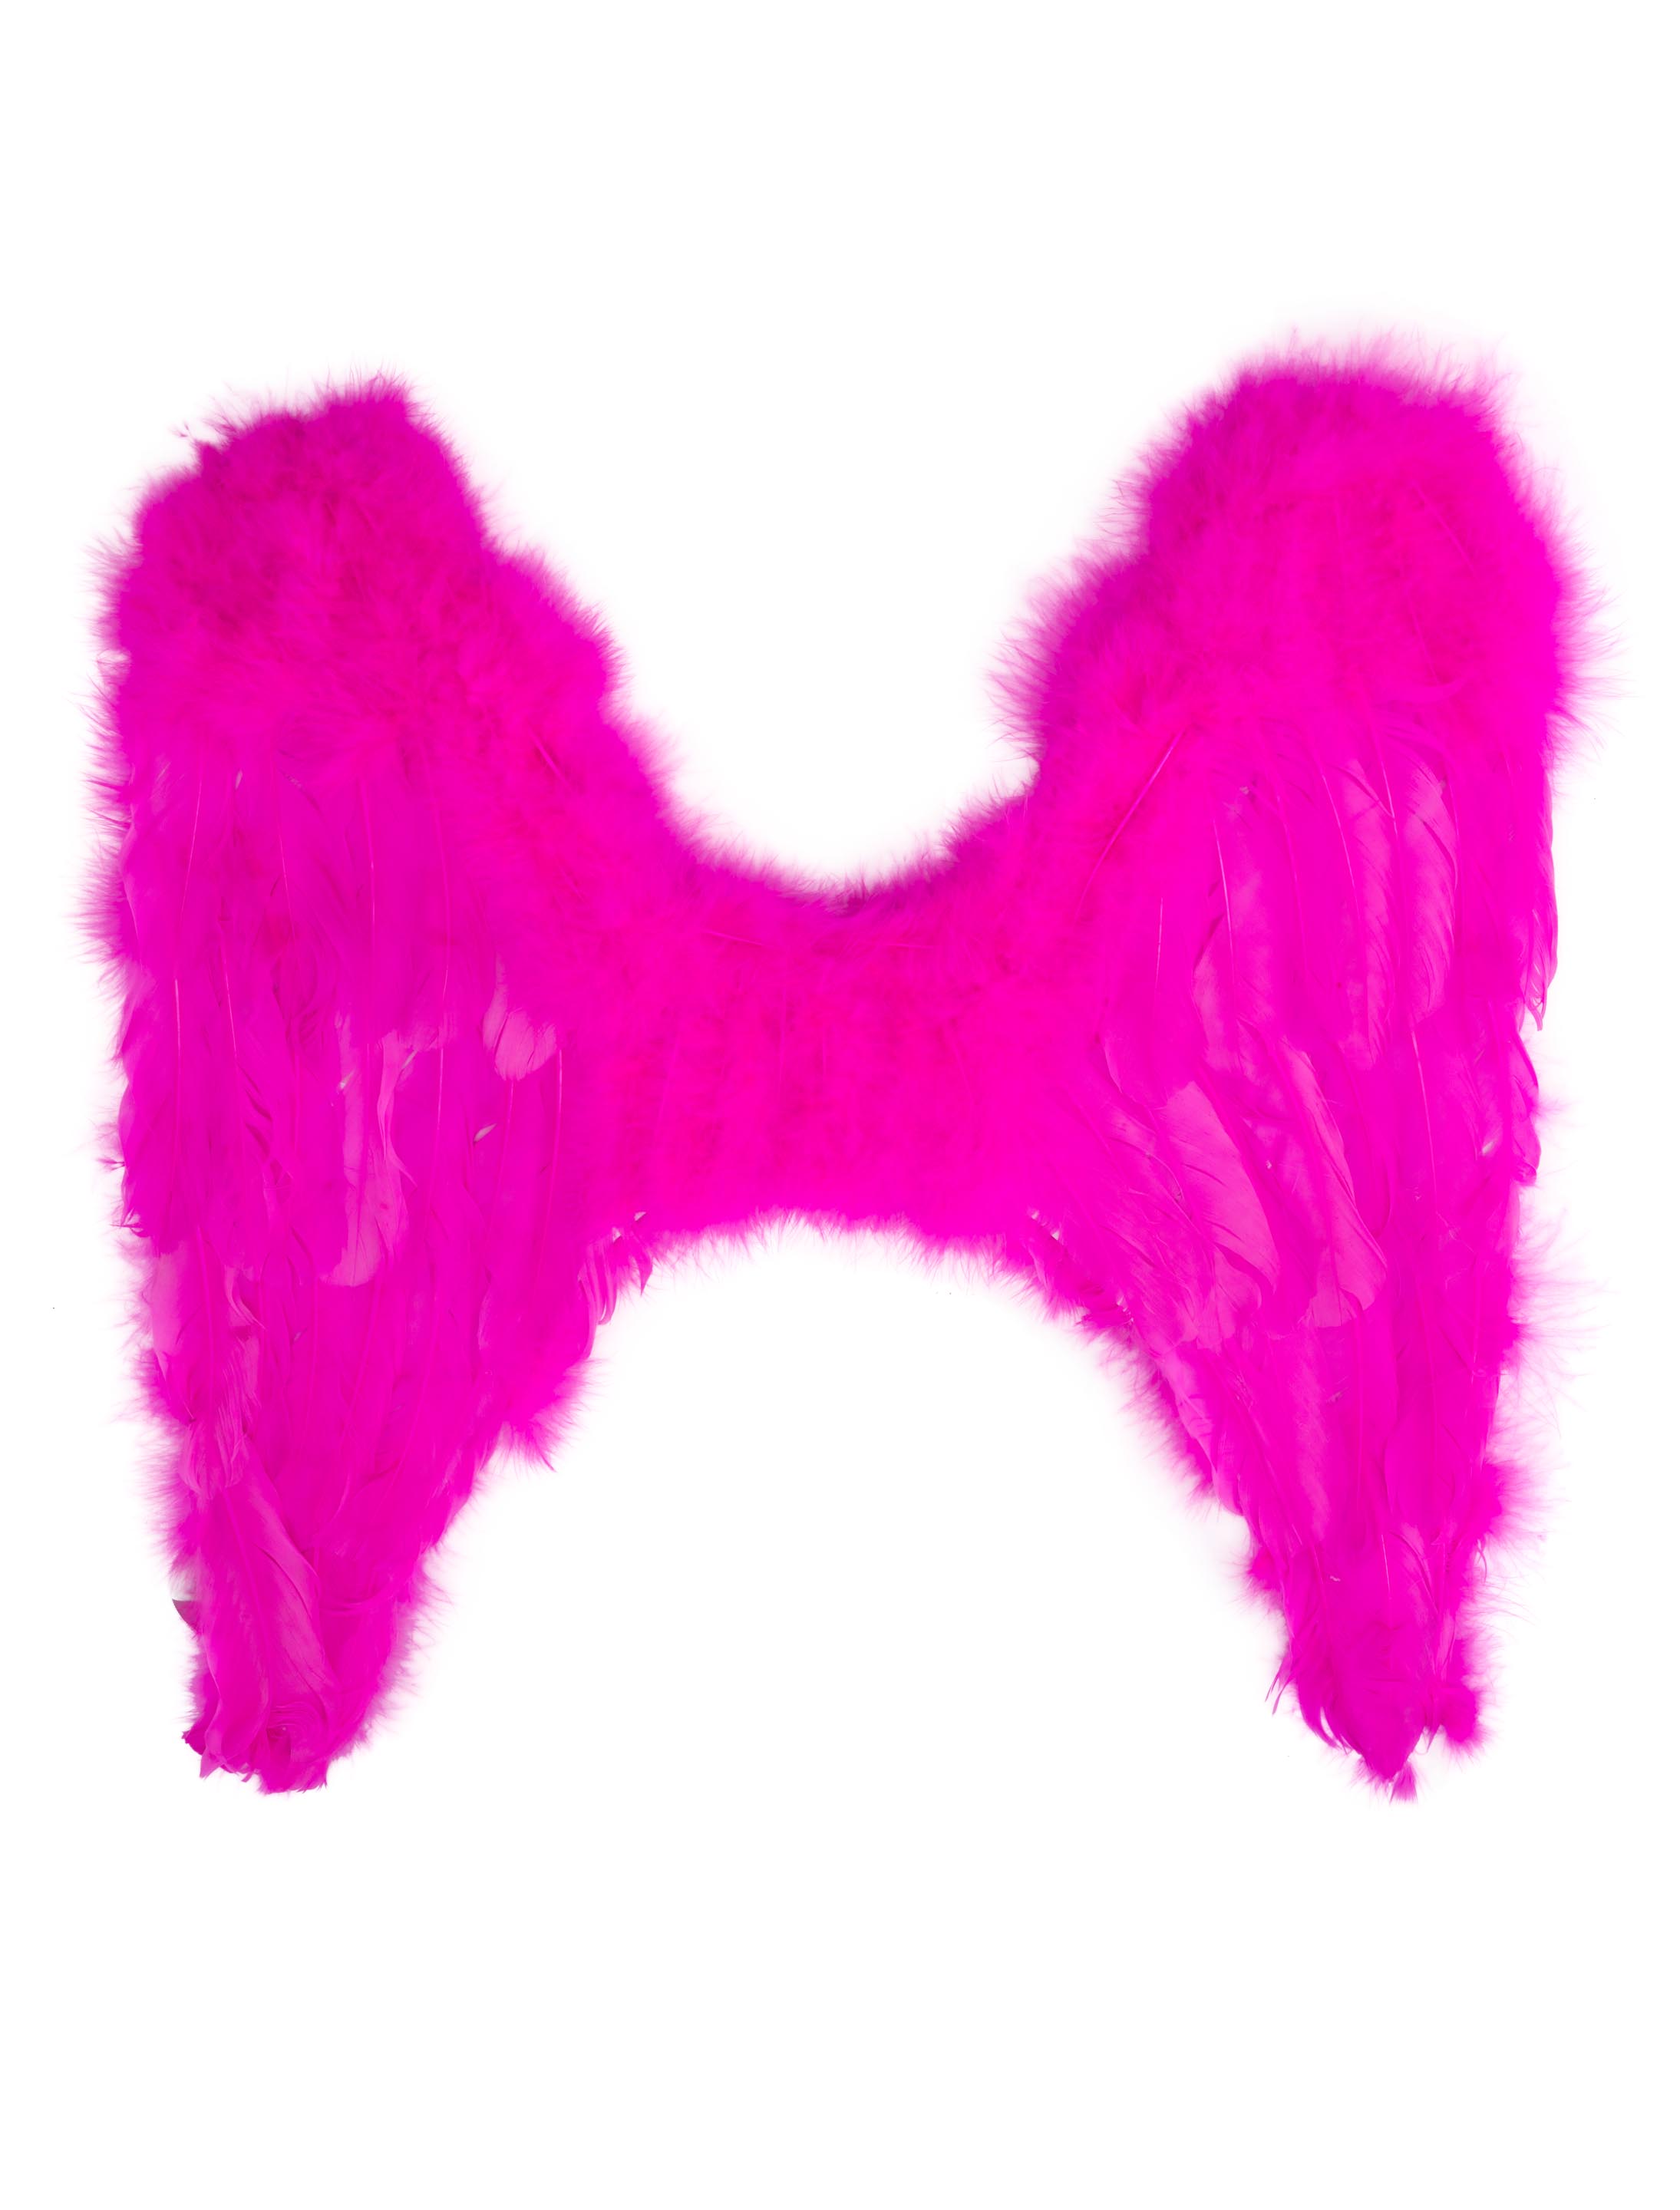 Engelsflügel pink groß 65 x 65 cm